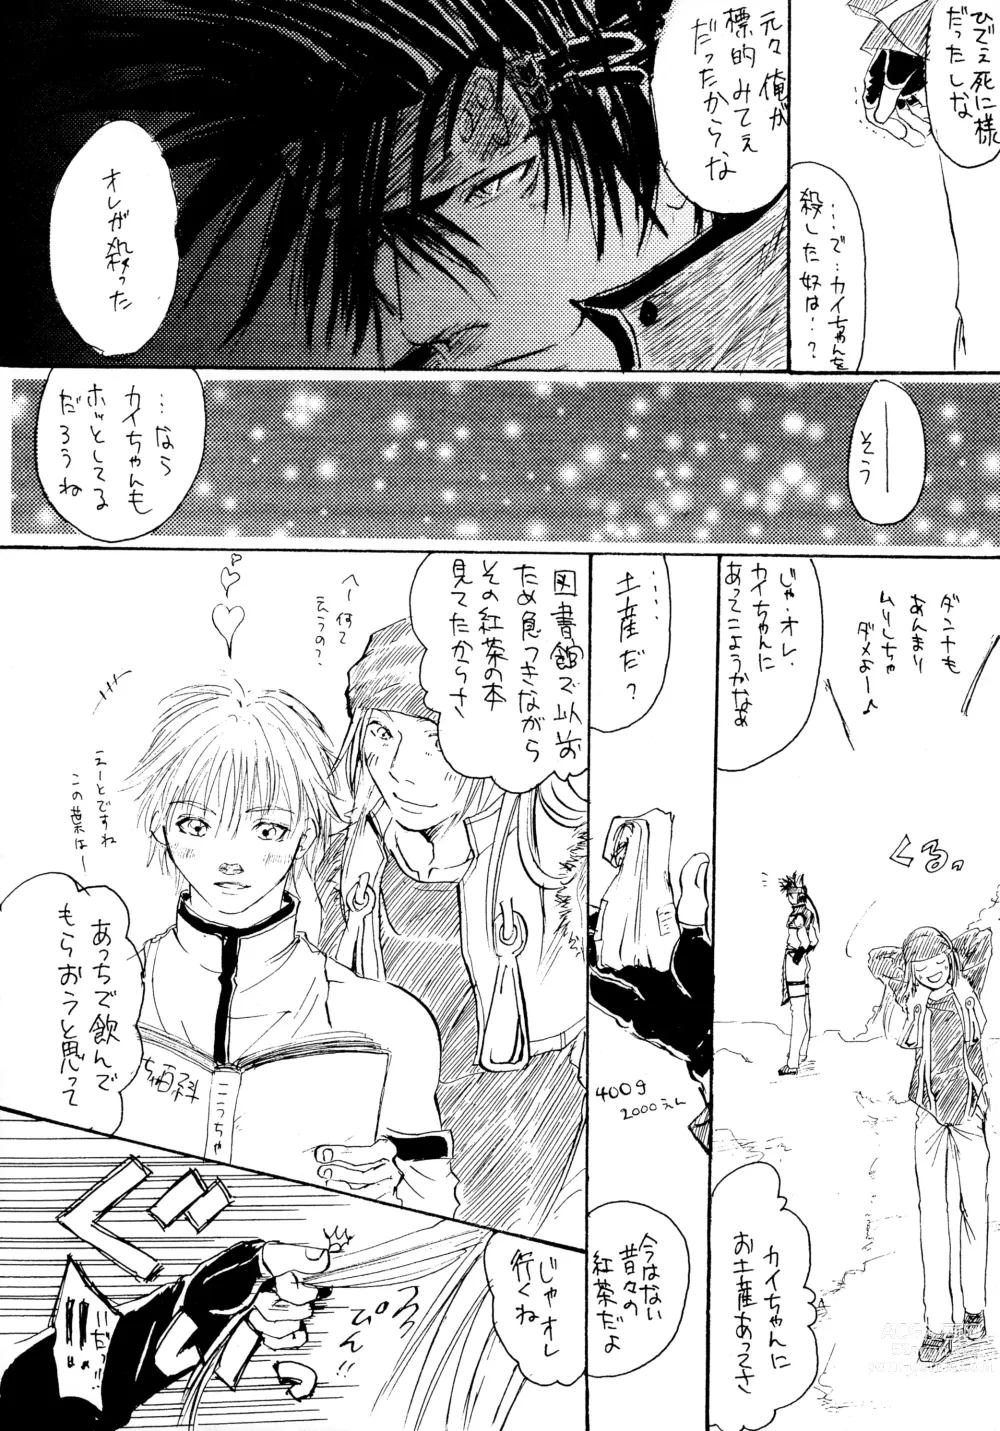 Page 9 of doujinshi BurningCry Kaiteiban